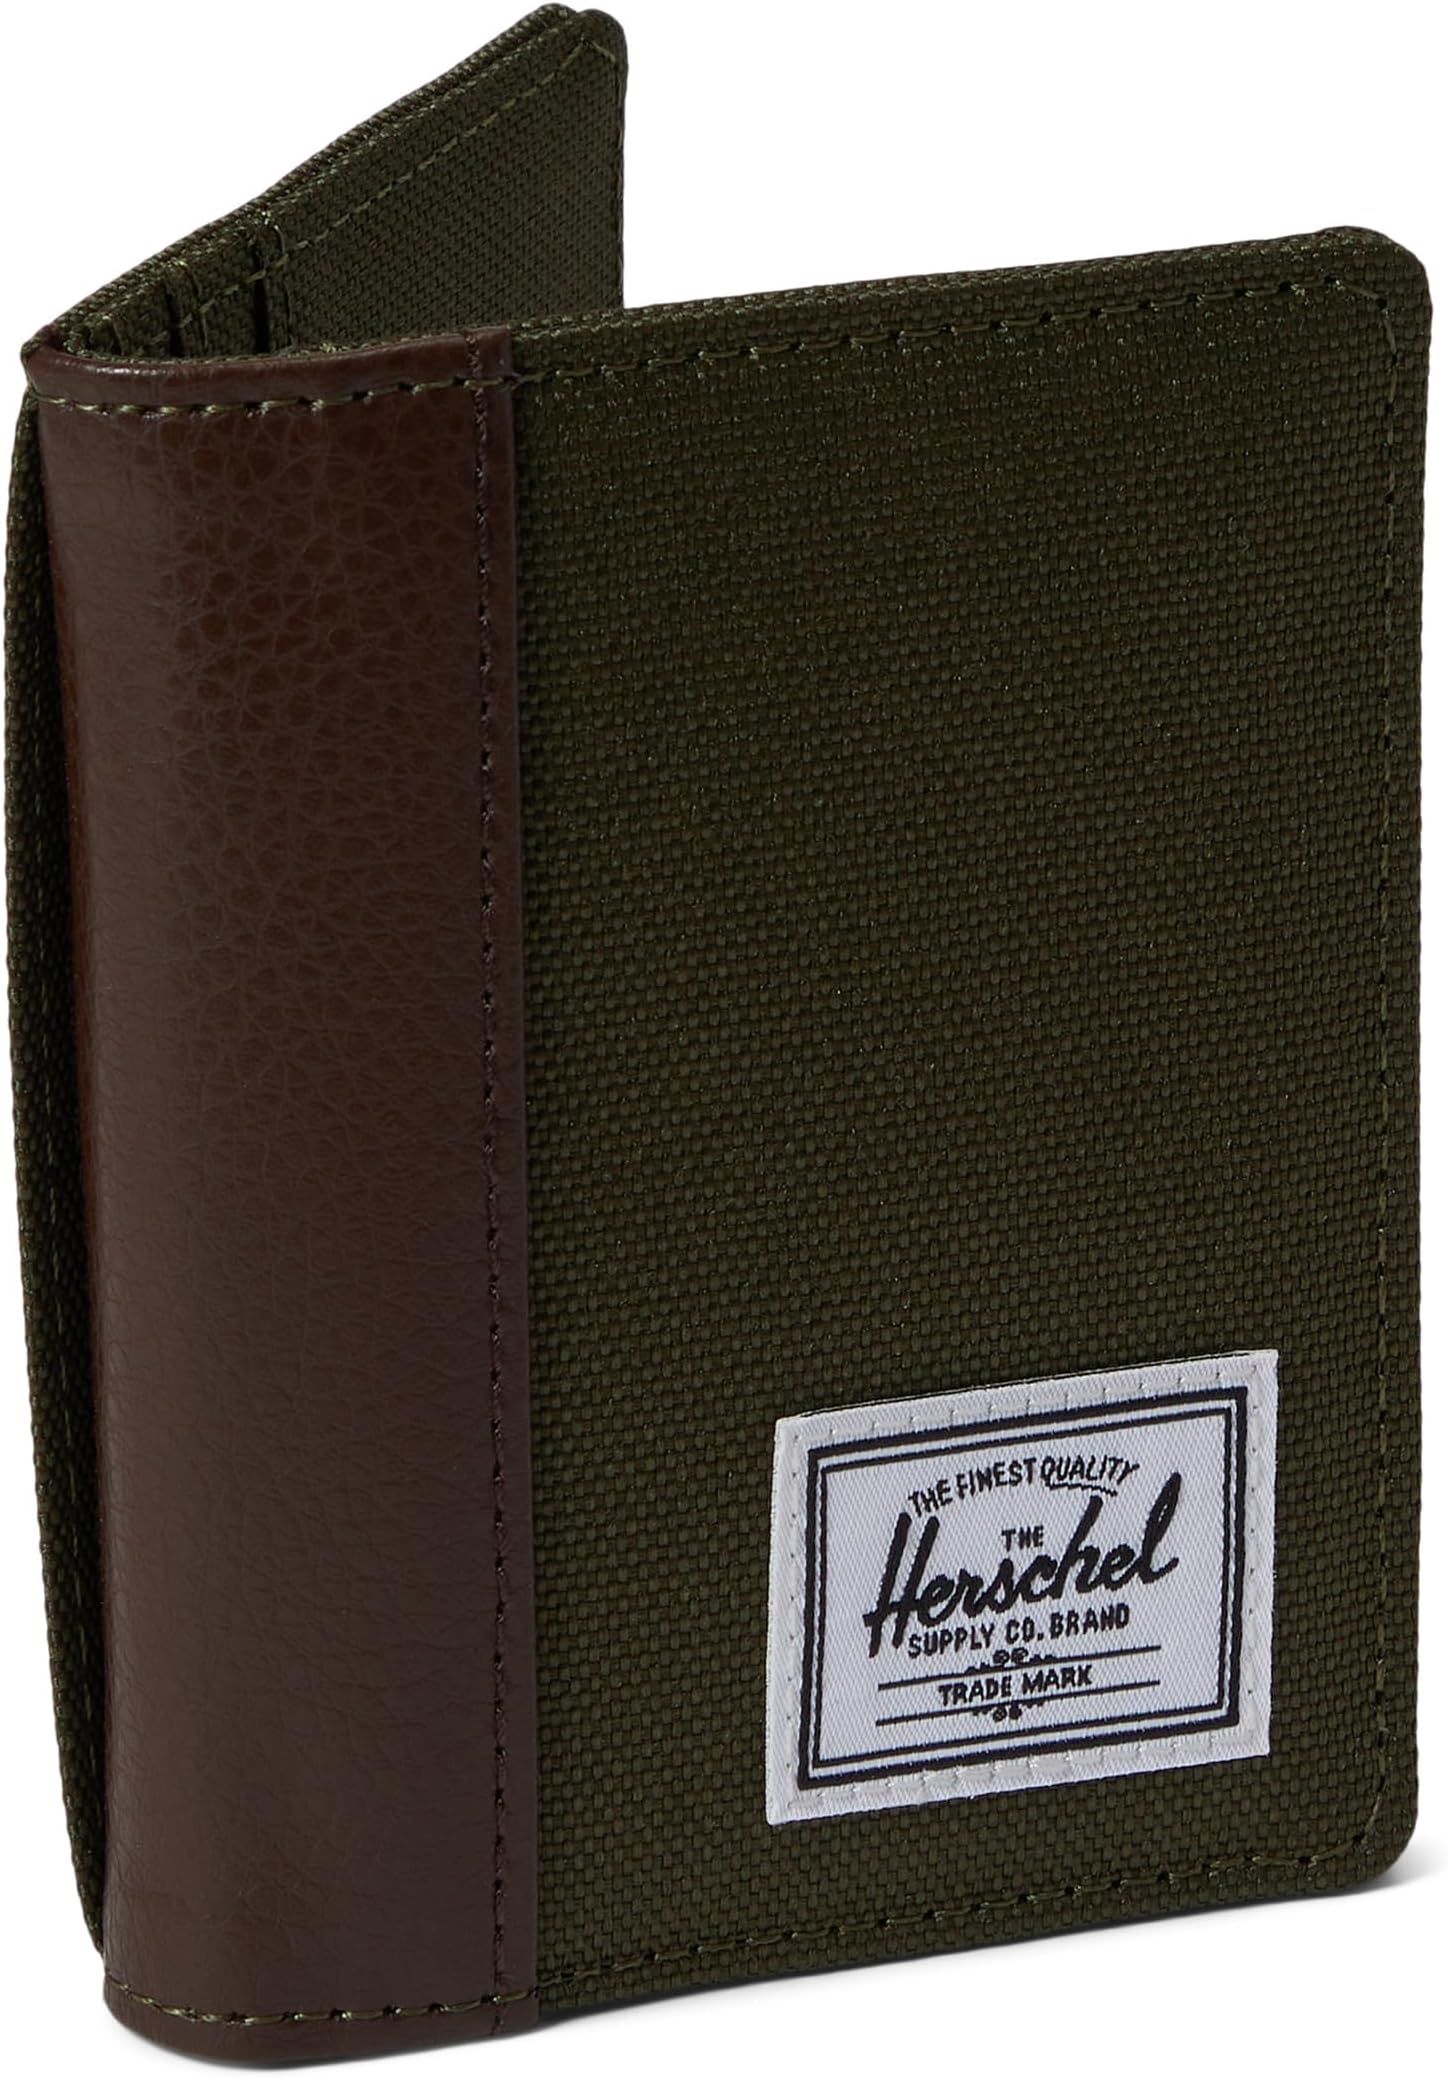 рюкзак heritage backpack herschel supply co цвет ivy green chicory coffee Гордон Кошелек Herschel Supply Co., цвет Ivy Green/Chicory Coffee